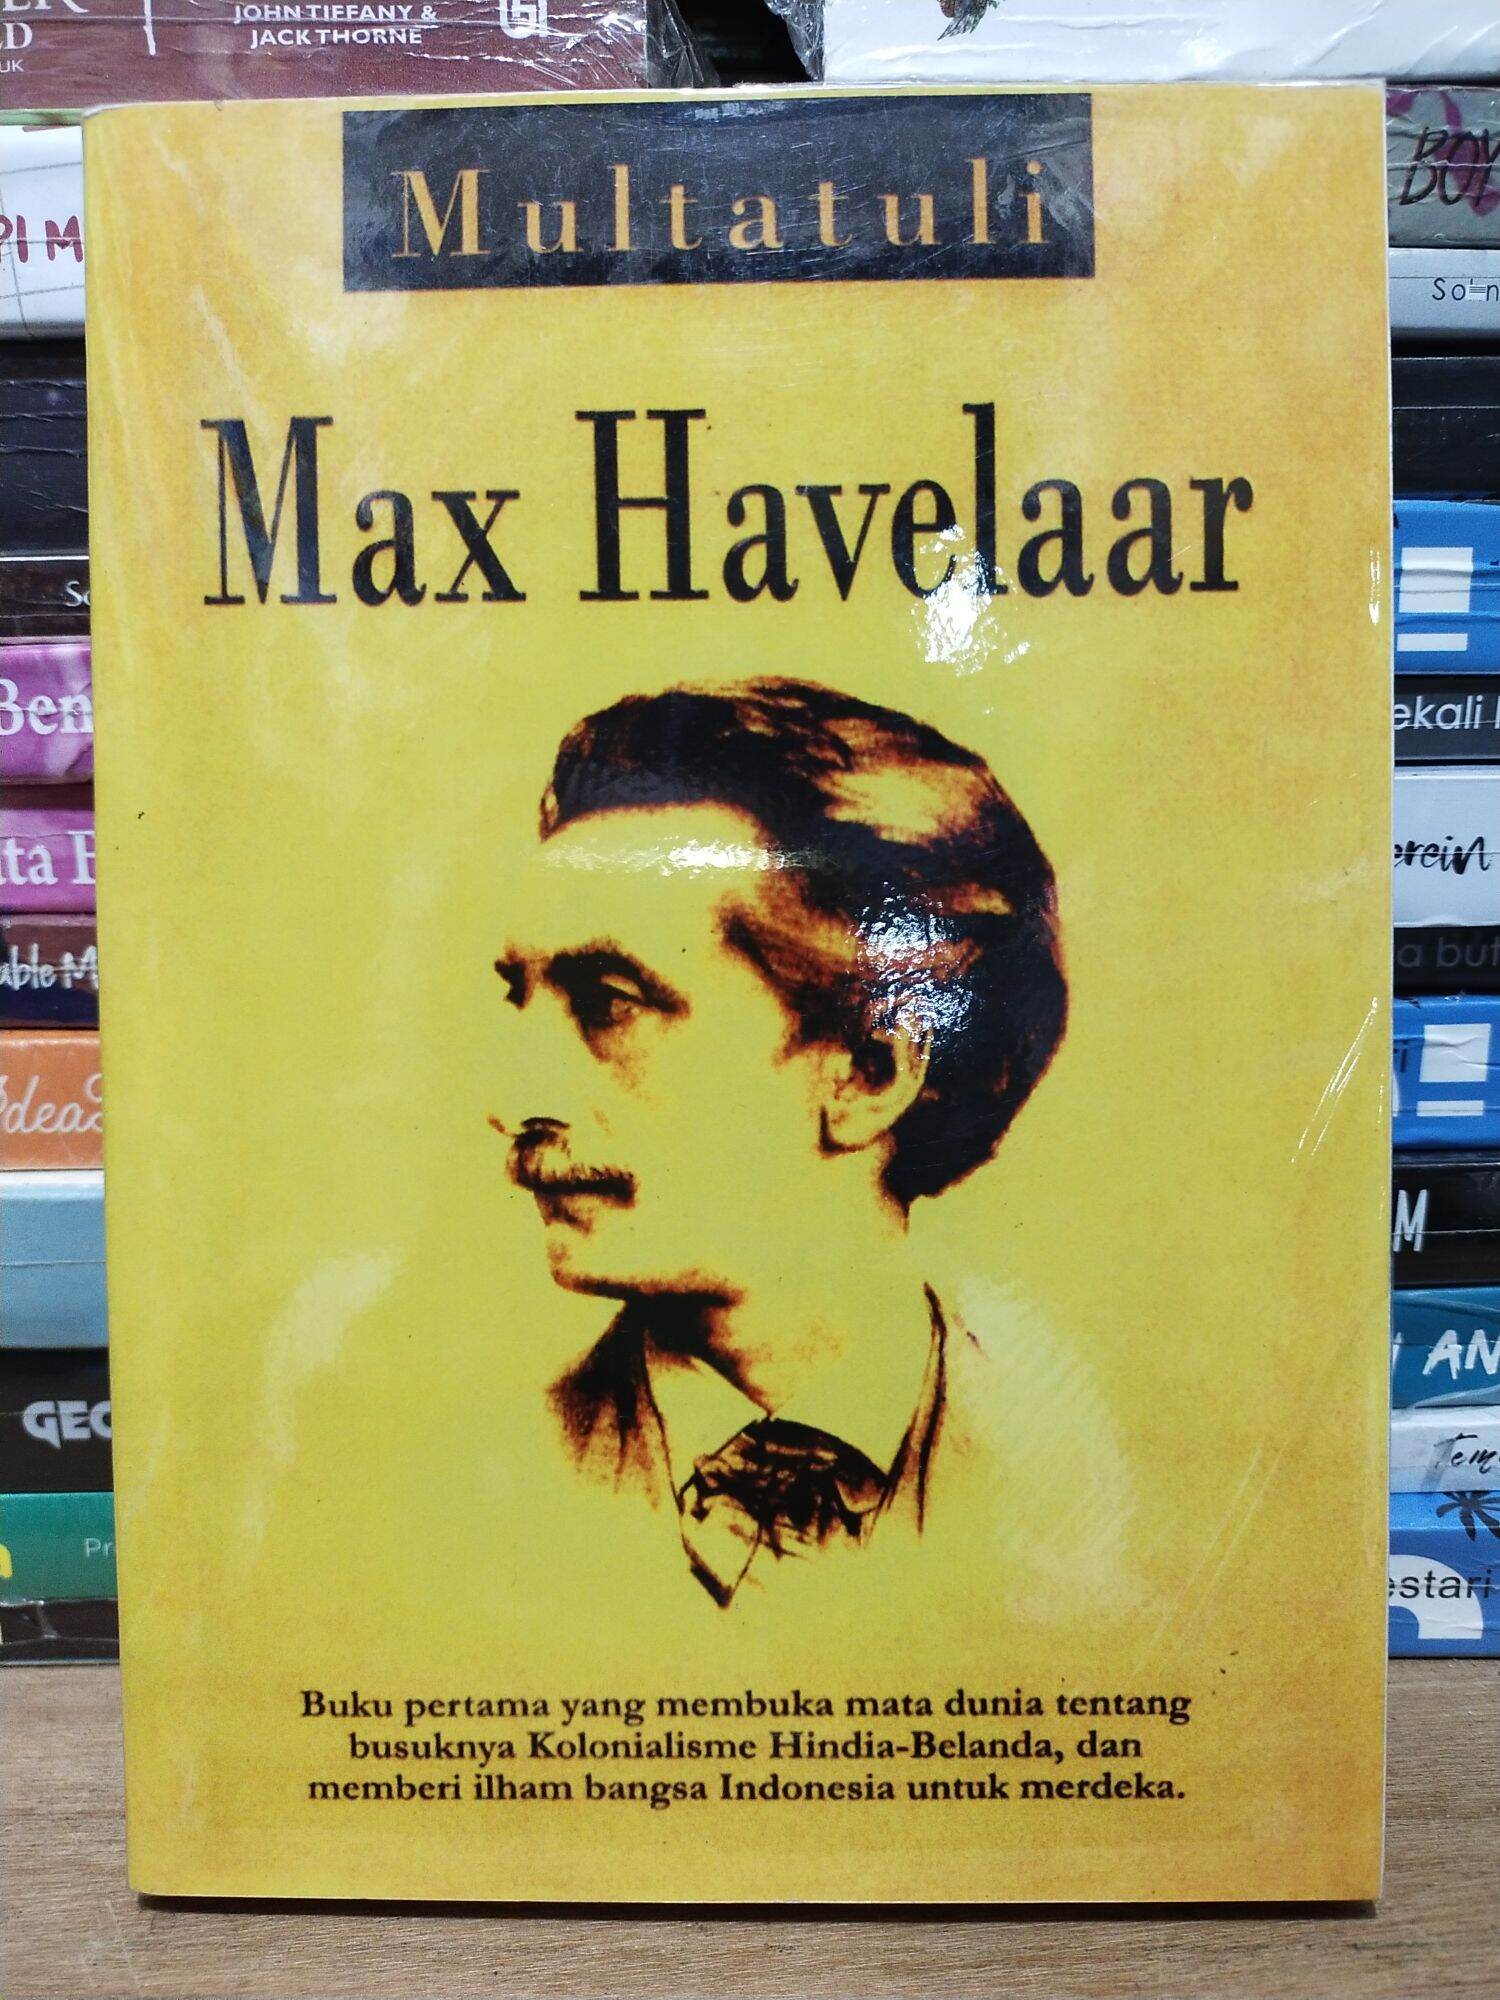 Buku Multatuli Max Havelaar